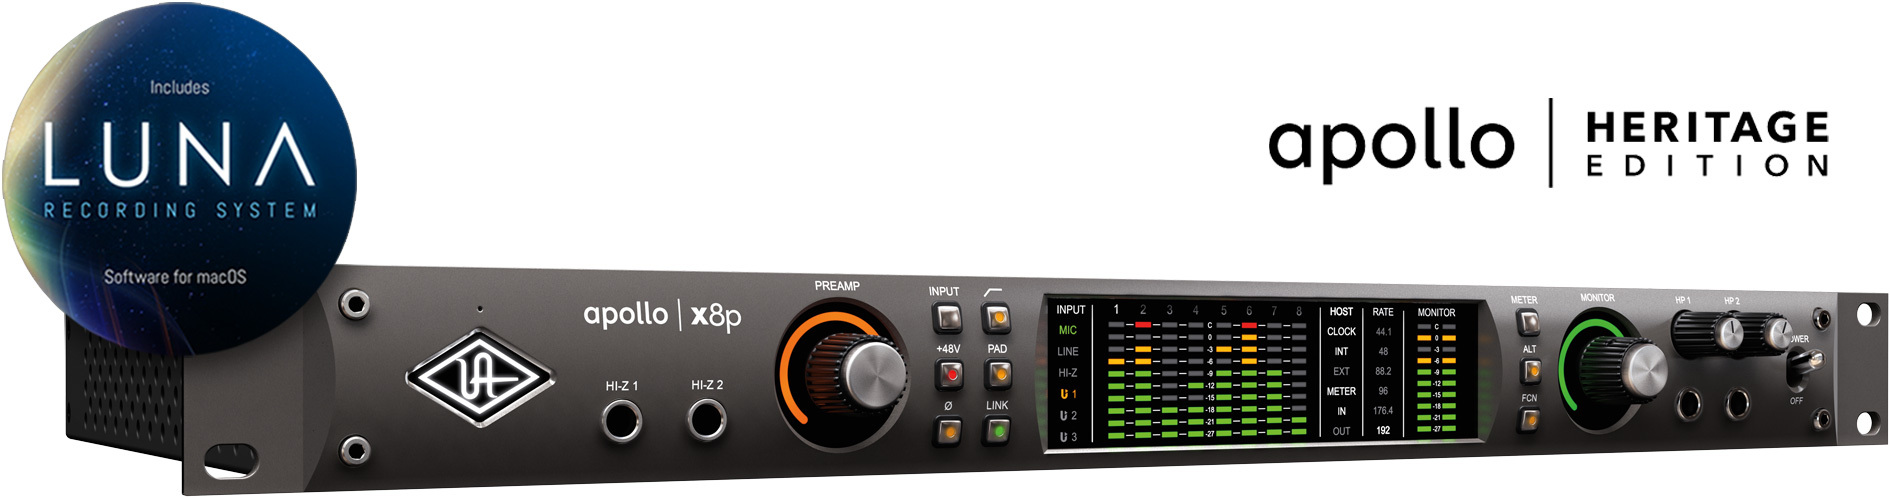 Universal Audio Apollo X8p Heritage Edition - Thunderbolt audio interface - Main picture